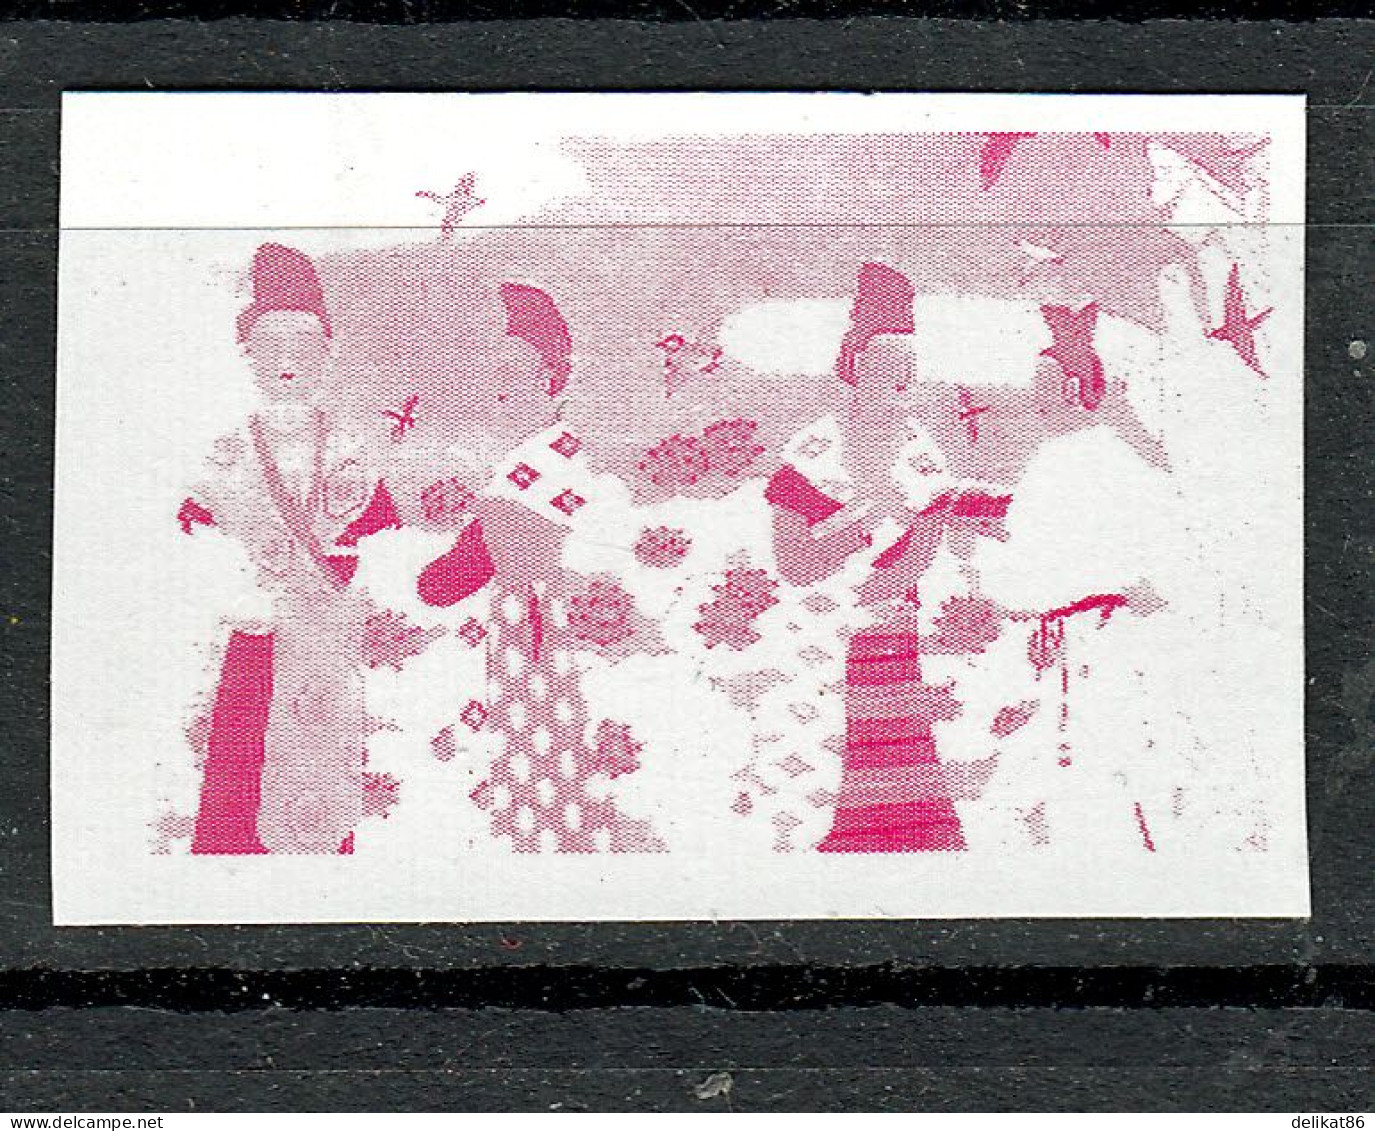 Probedruck Test Stamp Specimen China 1997  "Tang Dynasty Painting" - Essais & Réimpressions